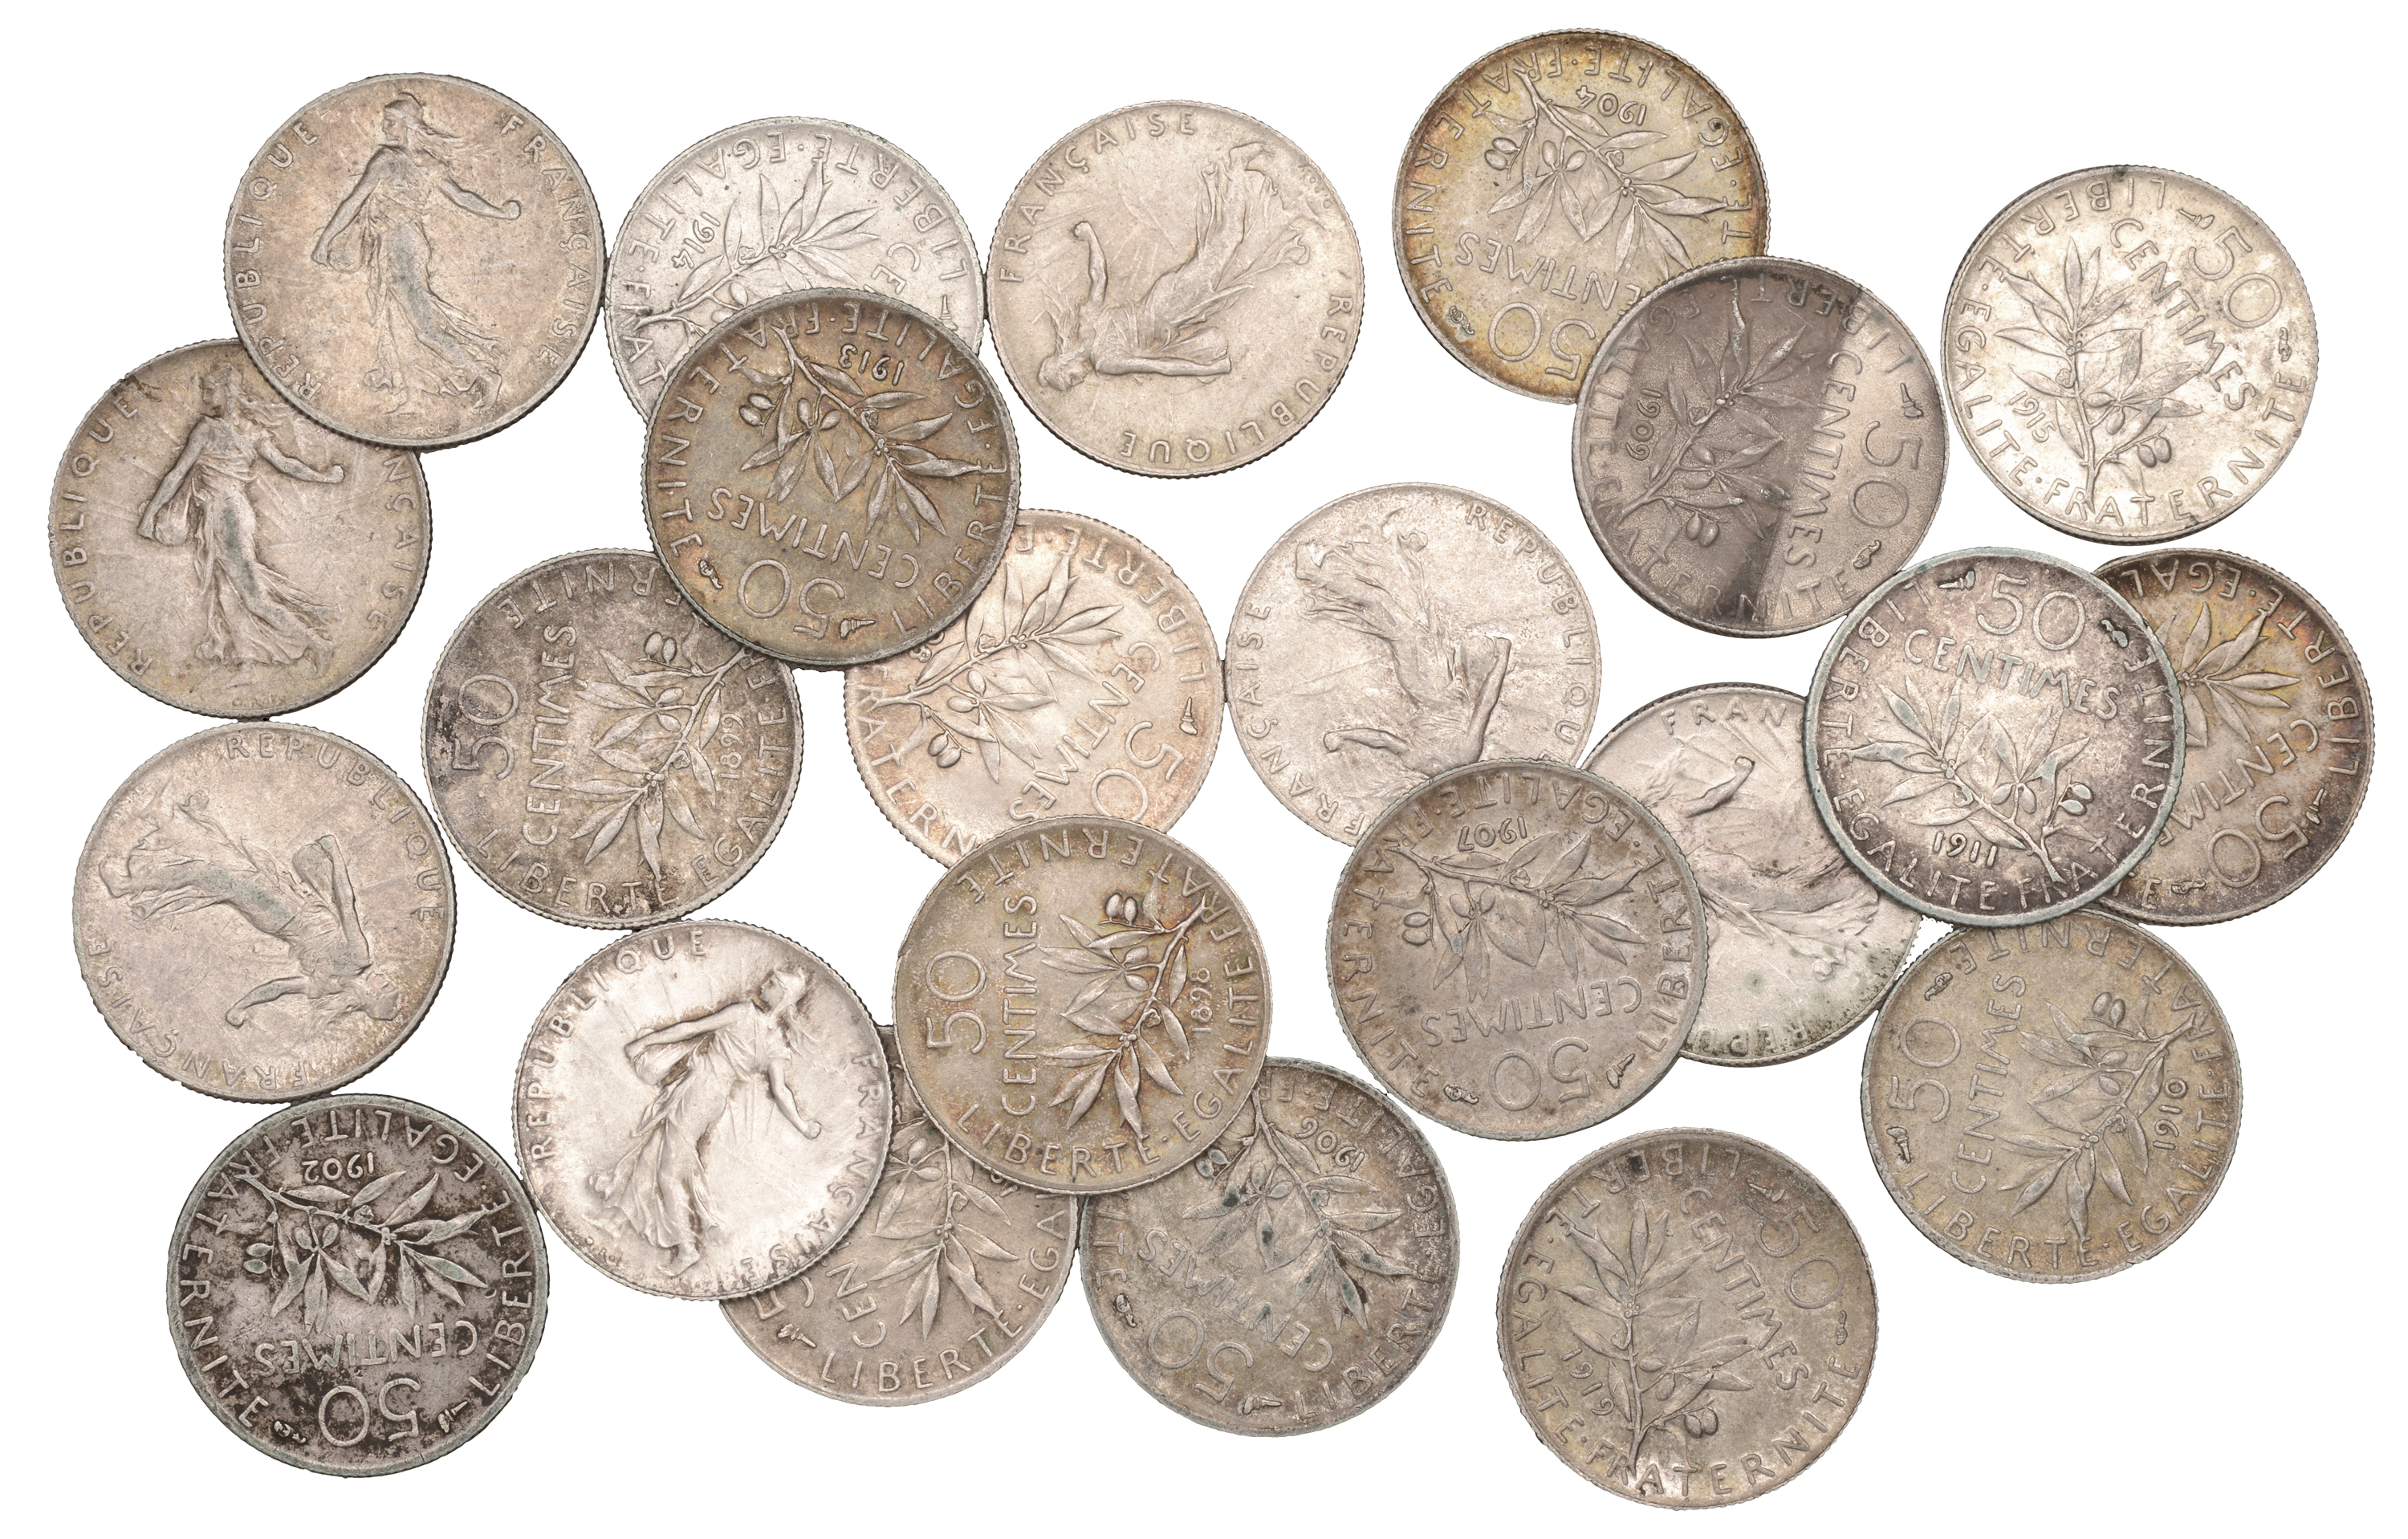 France, Third Republic (1871-1940), 50 Centimes (23), 1898-1920 inclusive (Gad. 420) [23]. V...